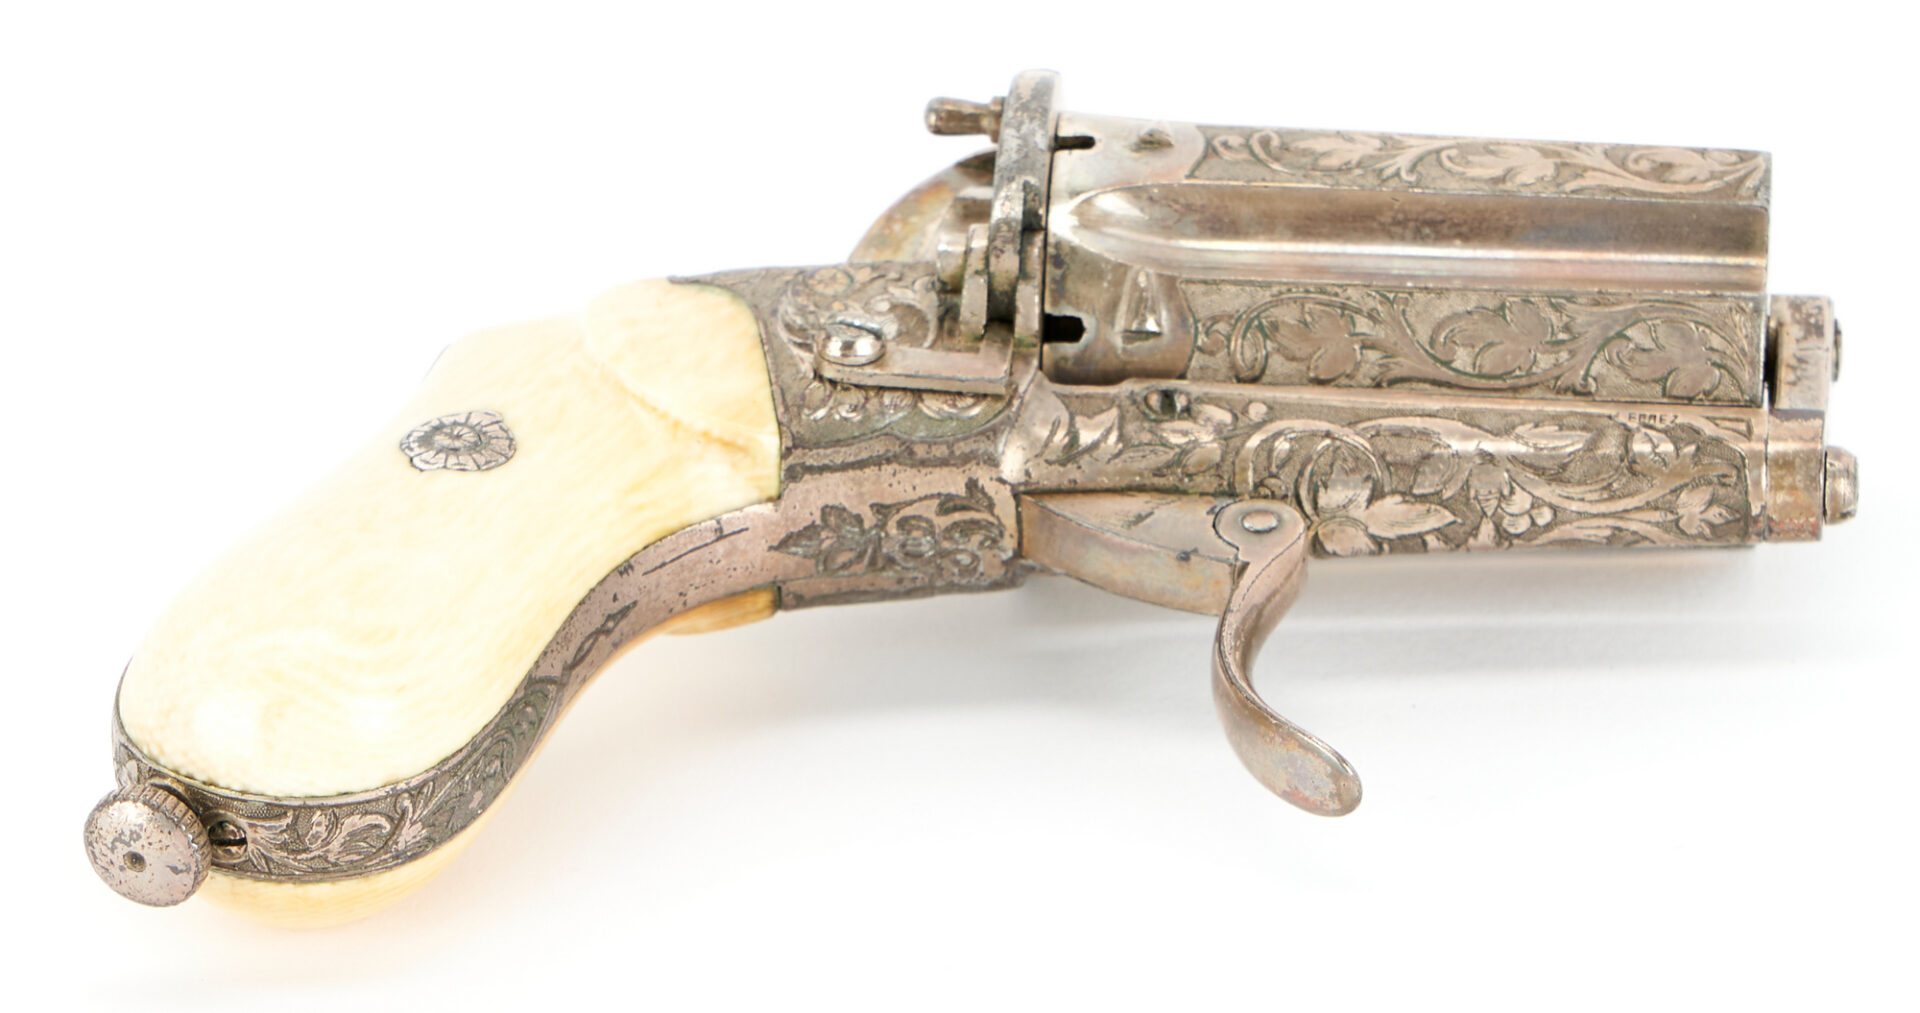 Lot 679: Lefaucheux Pinfire Pepperbox Revolver w/ Case, 8mm